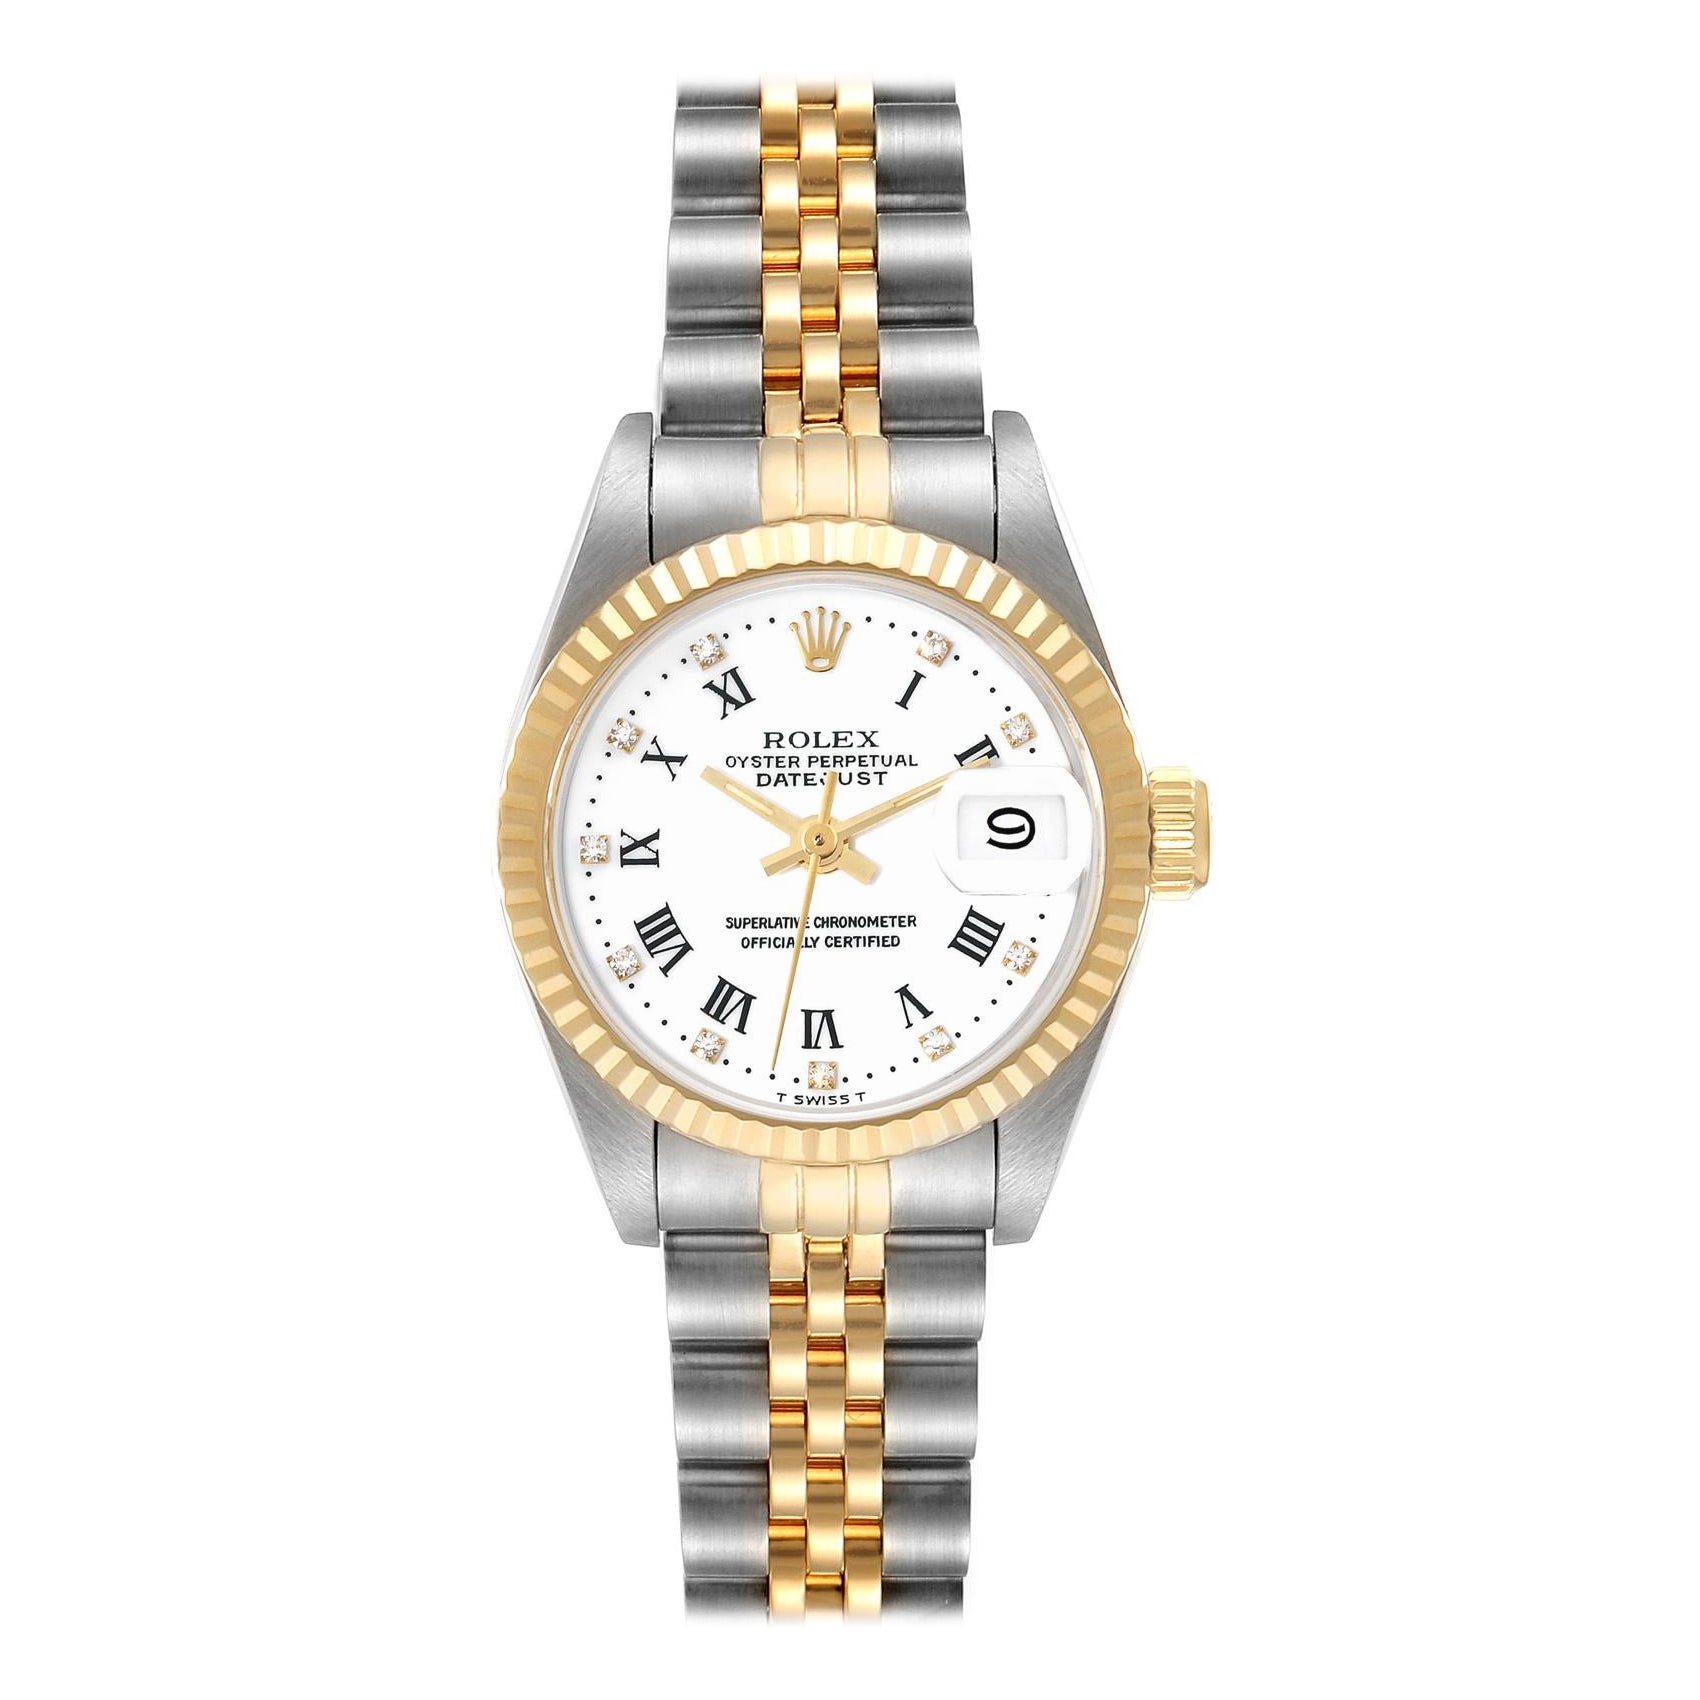 Rolex Datejust Steel Yellow Gold Diamond Dial Ladies Watch 69173